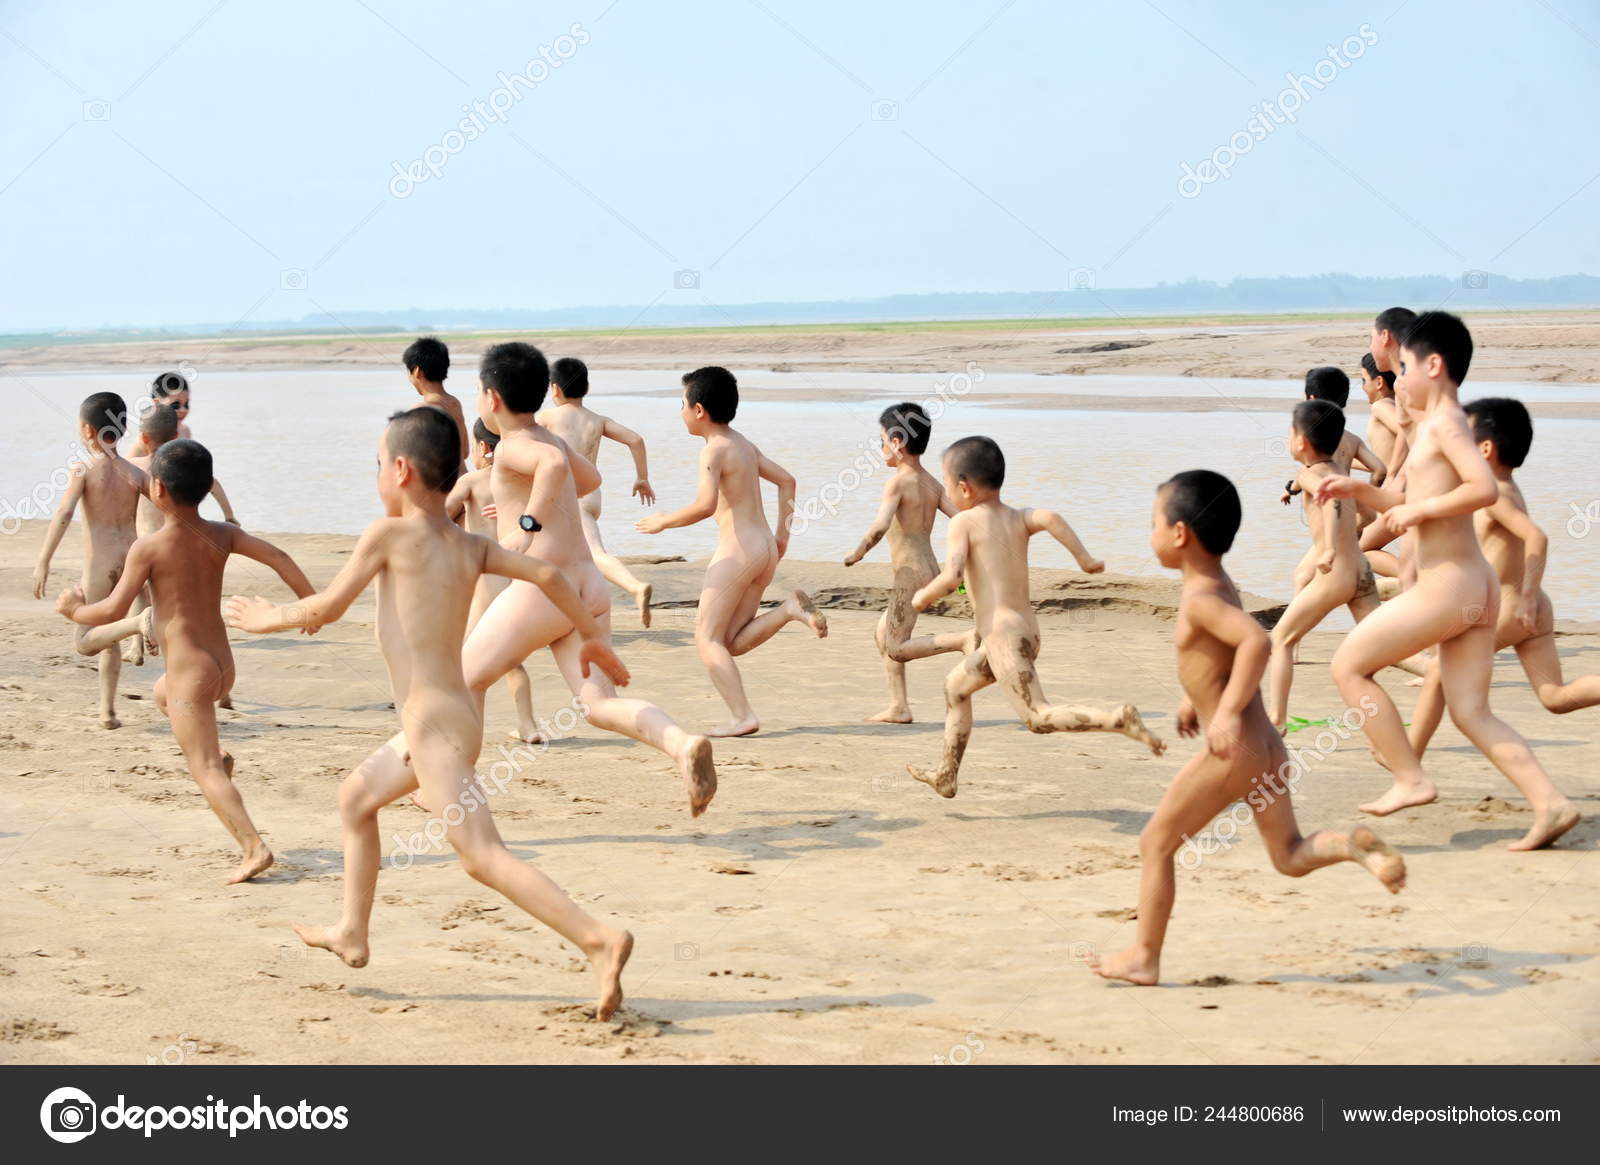 boys running around naked